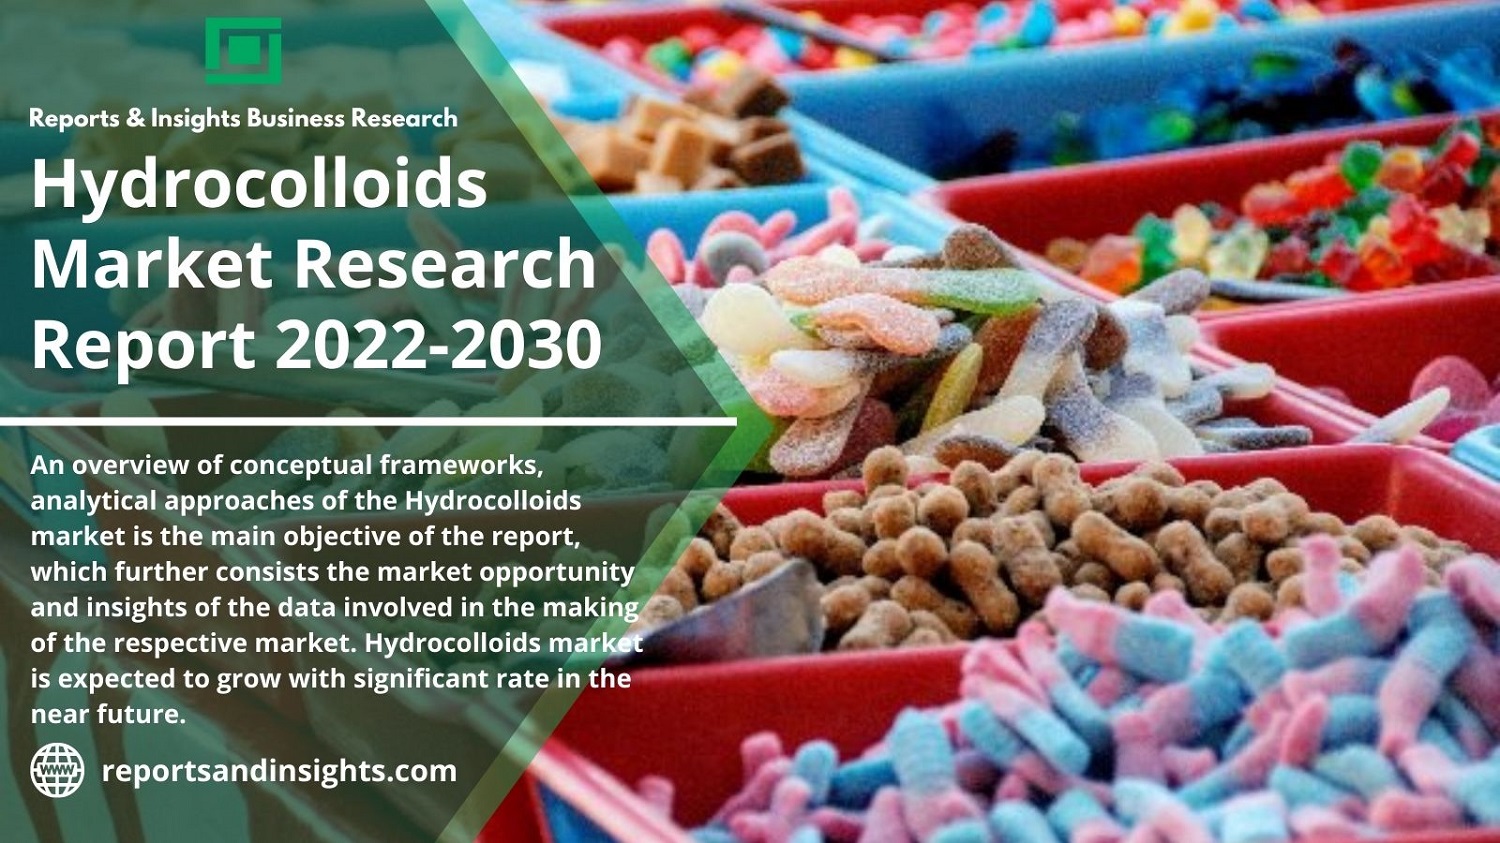 Global Development Hydrocolloids Market Report 2022 | Latest Technology, Size-Share, Future Growth, Supply-Demand Scenario, Forecast Research Report 2030